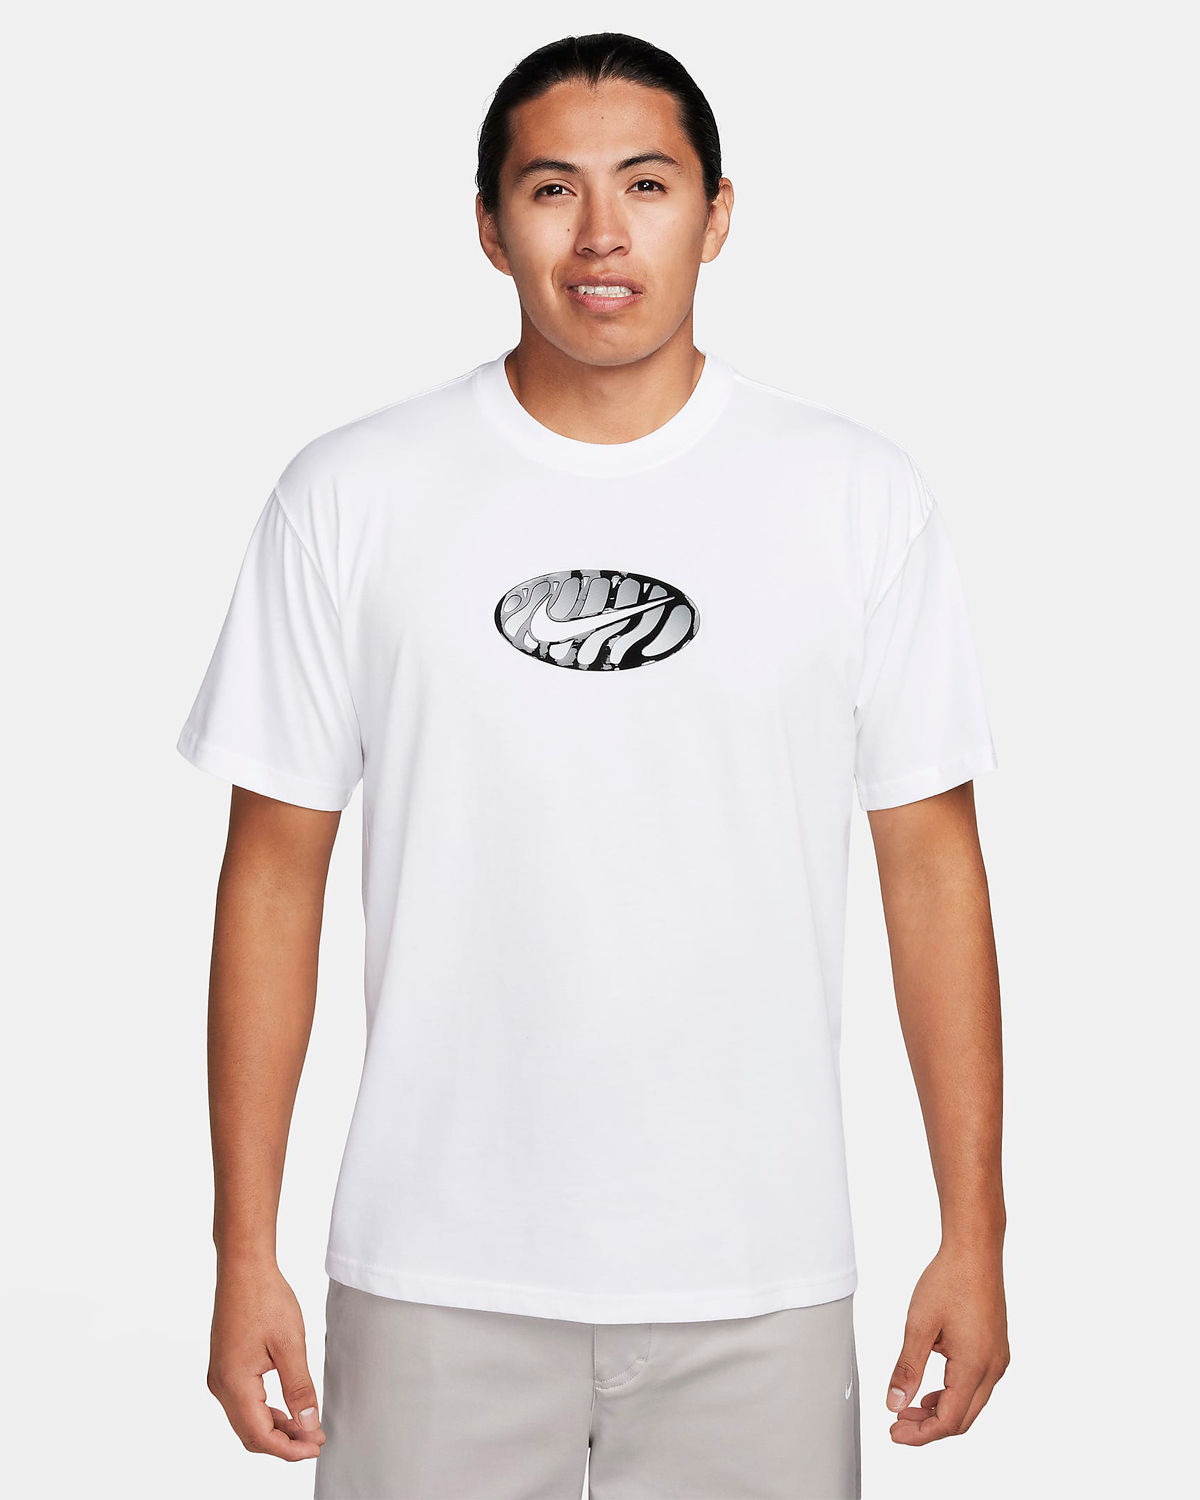 Nike Air Max Plus T Shirt White Black Silver 1